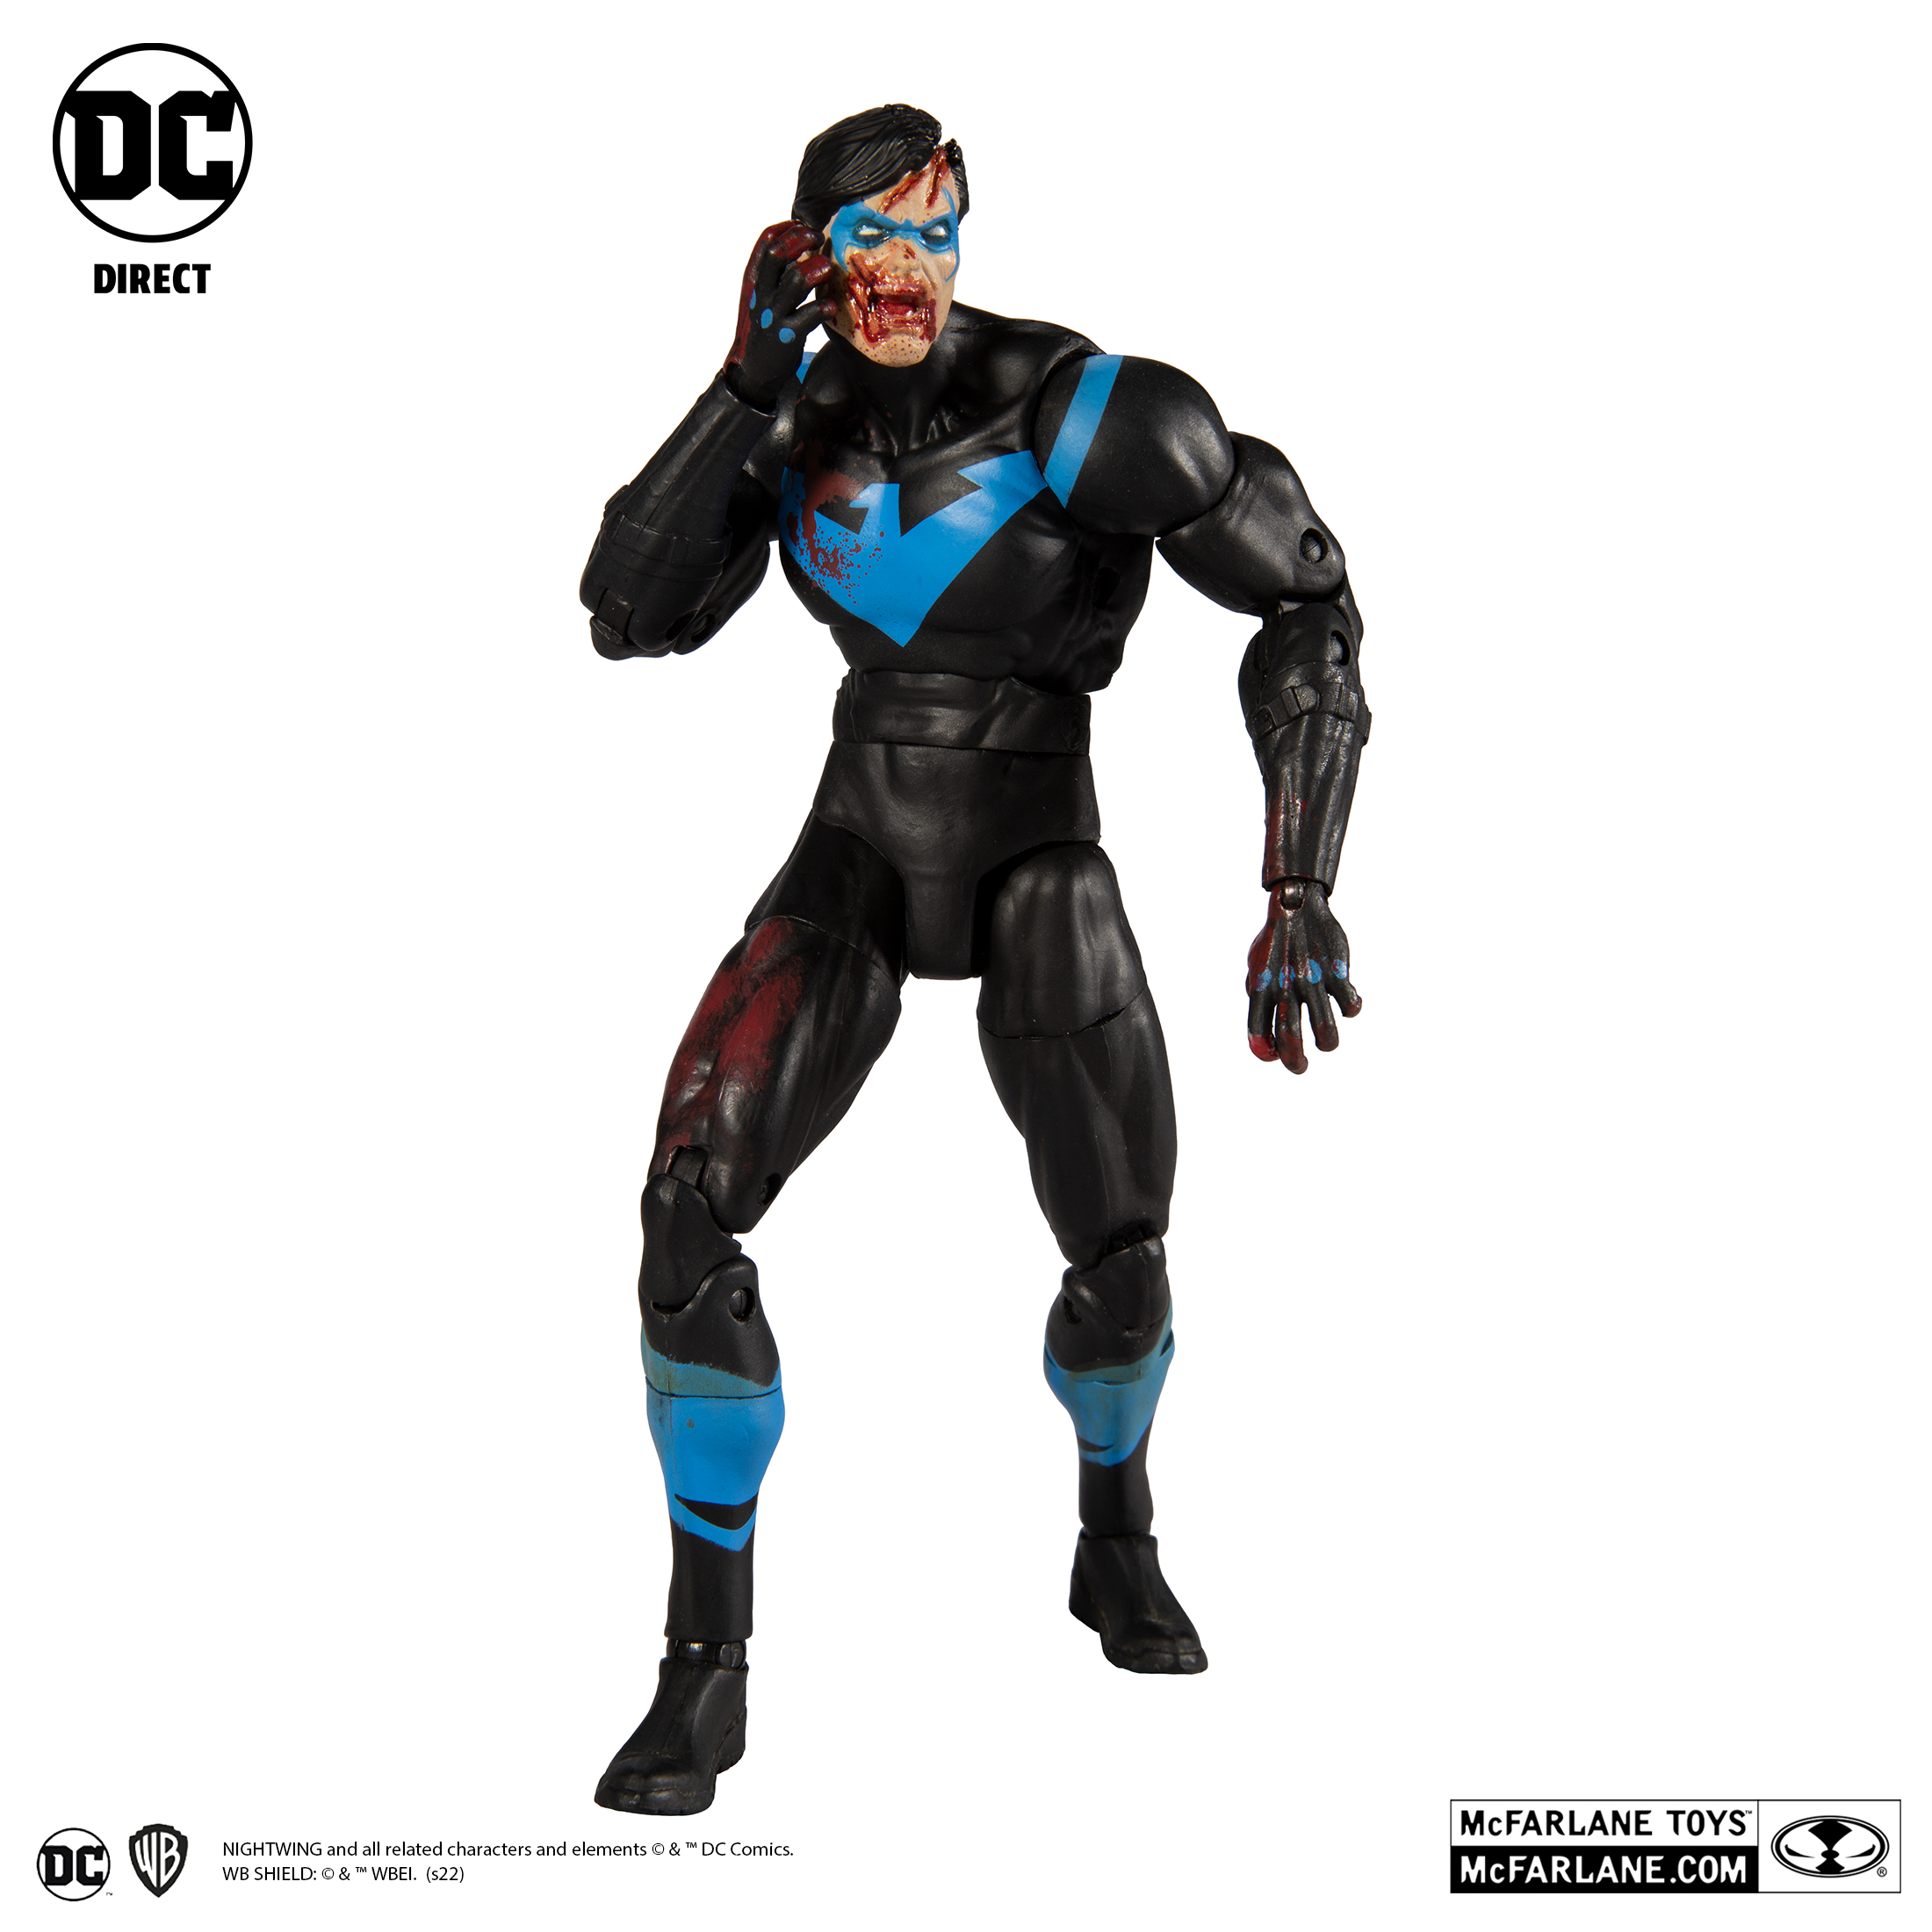 Mezco Toyz SDCC DC Universe preview - Black Adam, Deathstroke